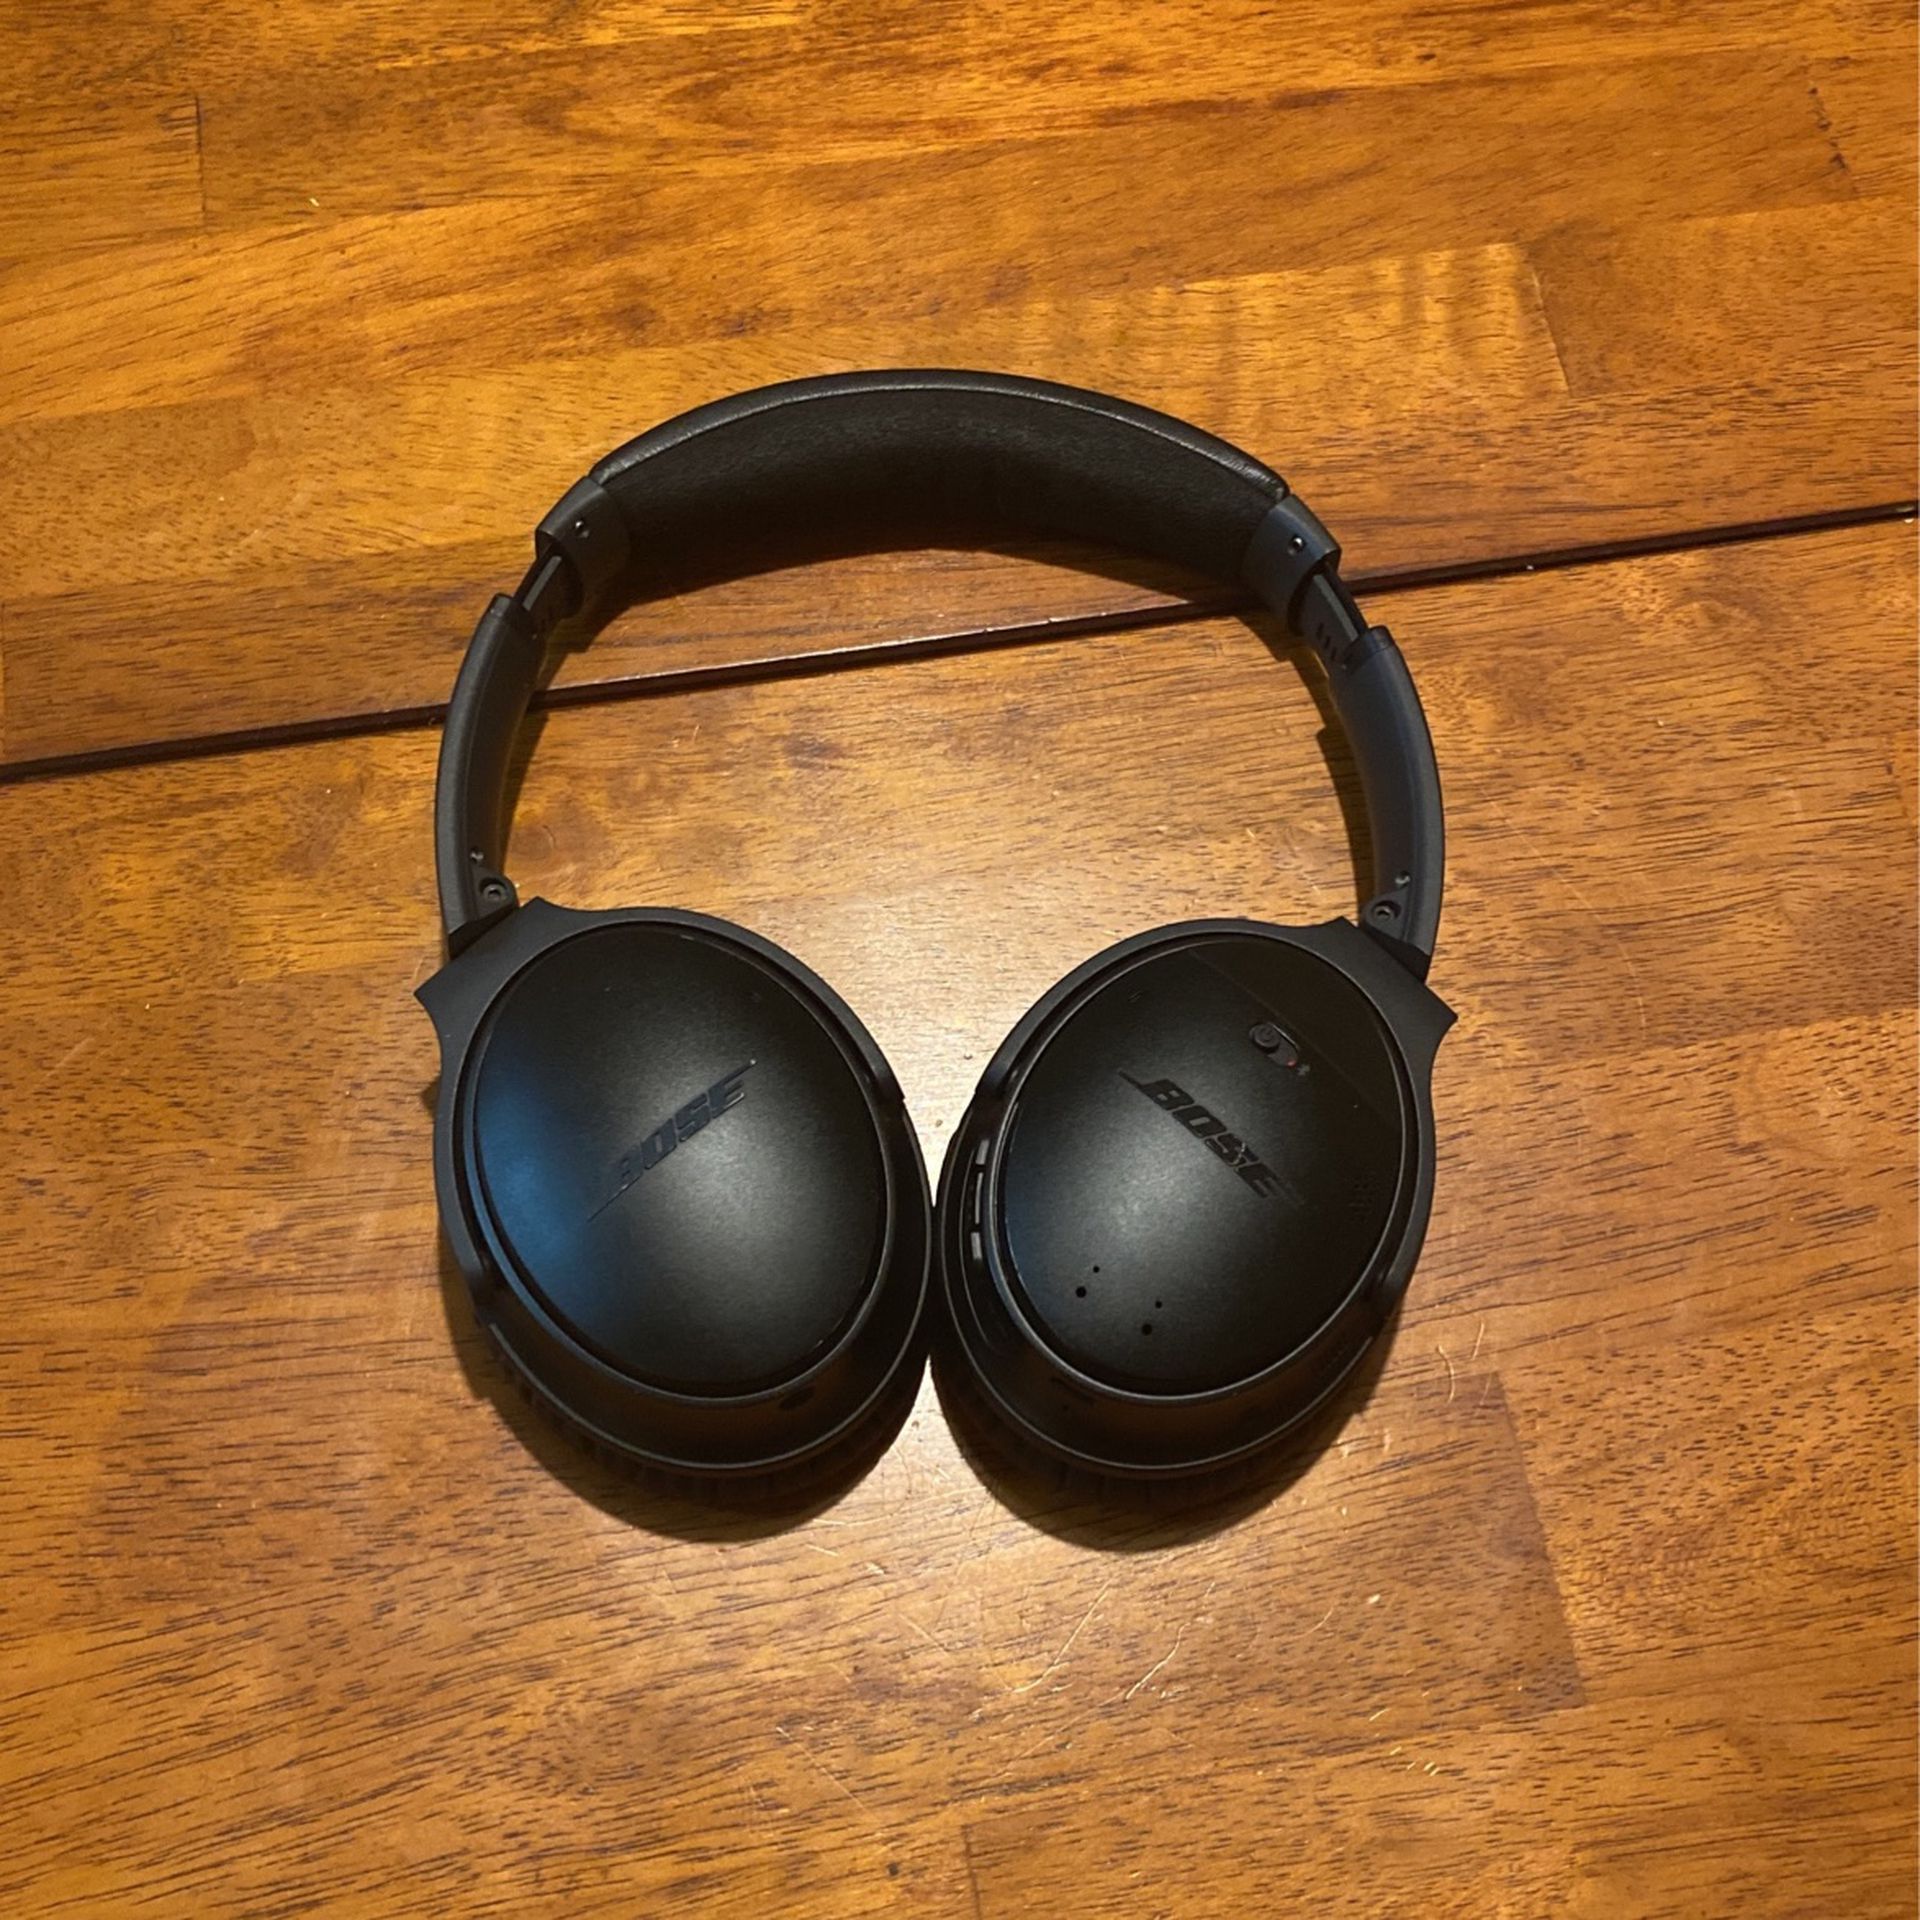 Bose Qc35 Noise cancelling headphones